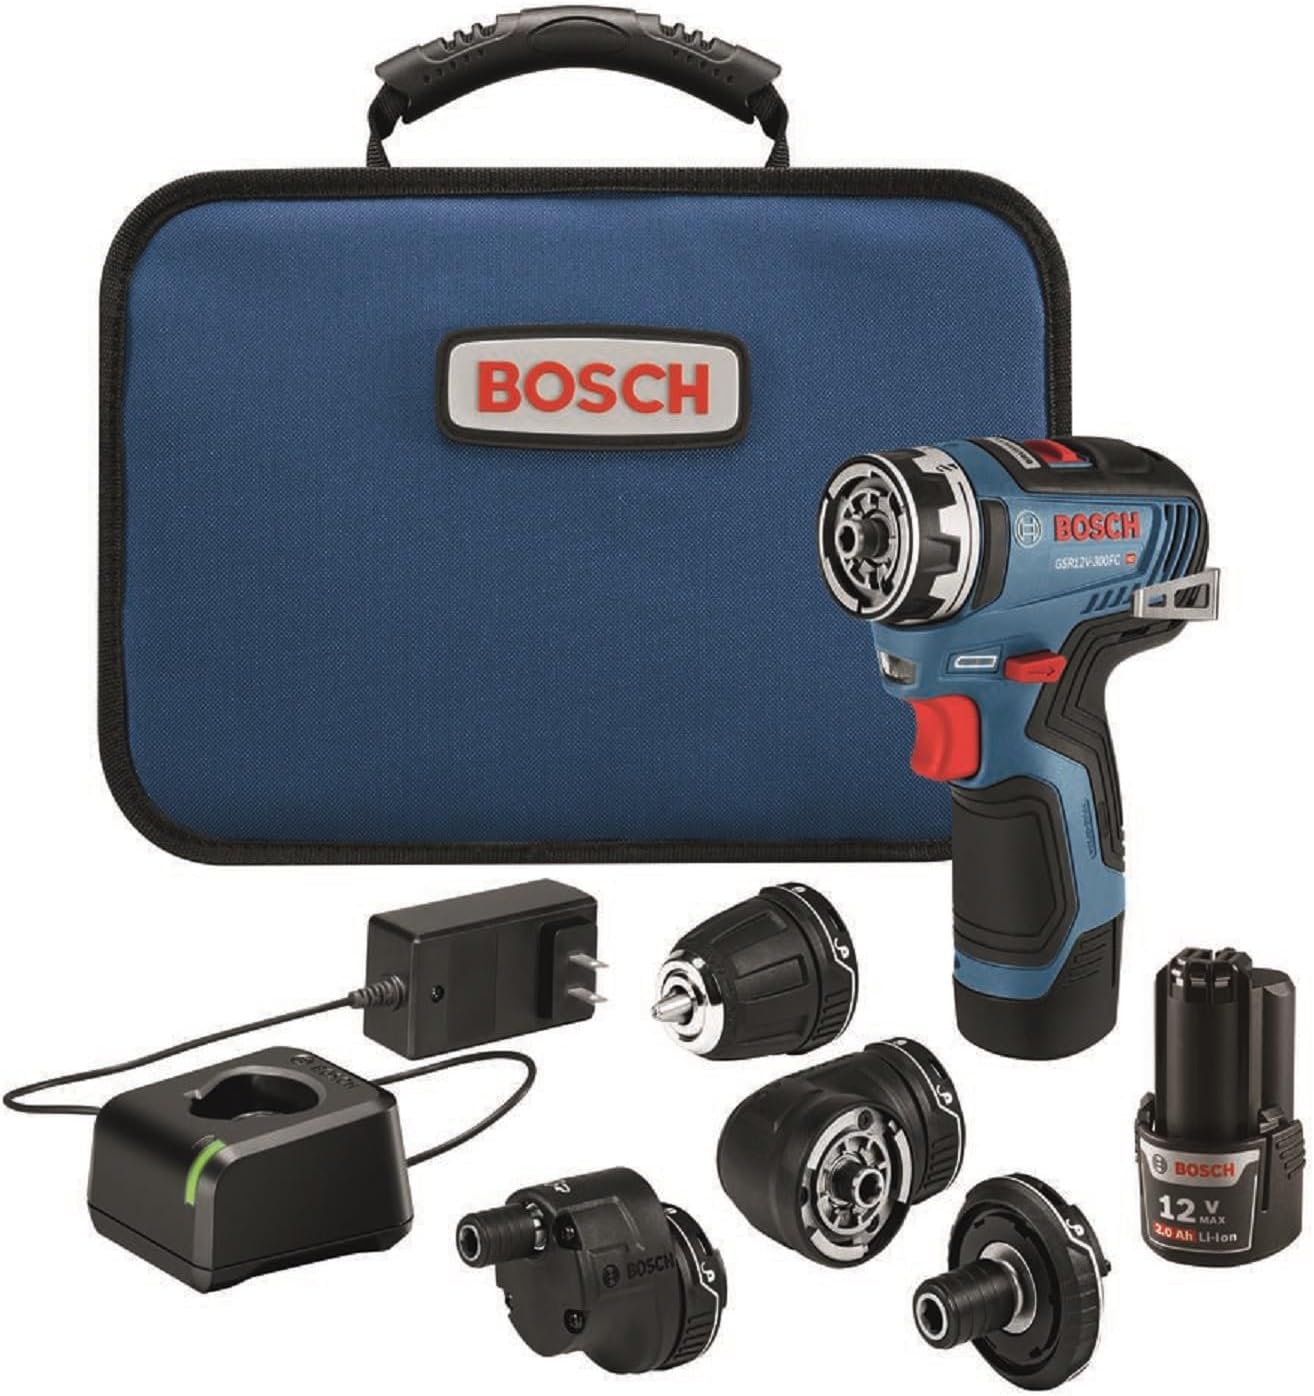 Bosch Gsr12V-300Fcb22 12V Max Ec Brushless Flexiclick 5-In-1 Drill/Driver System With (2) 2.0 Ah Batteries